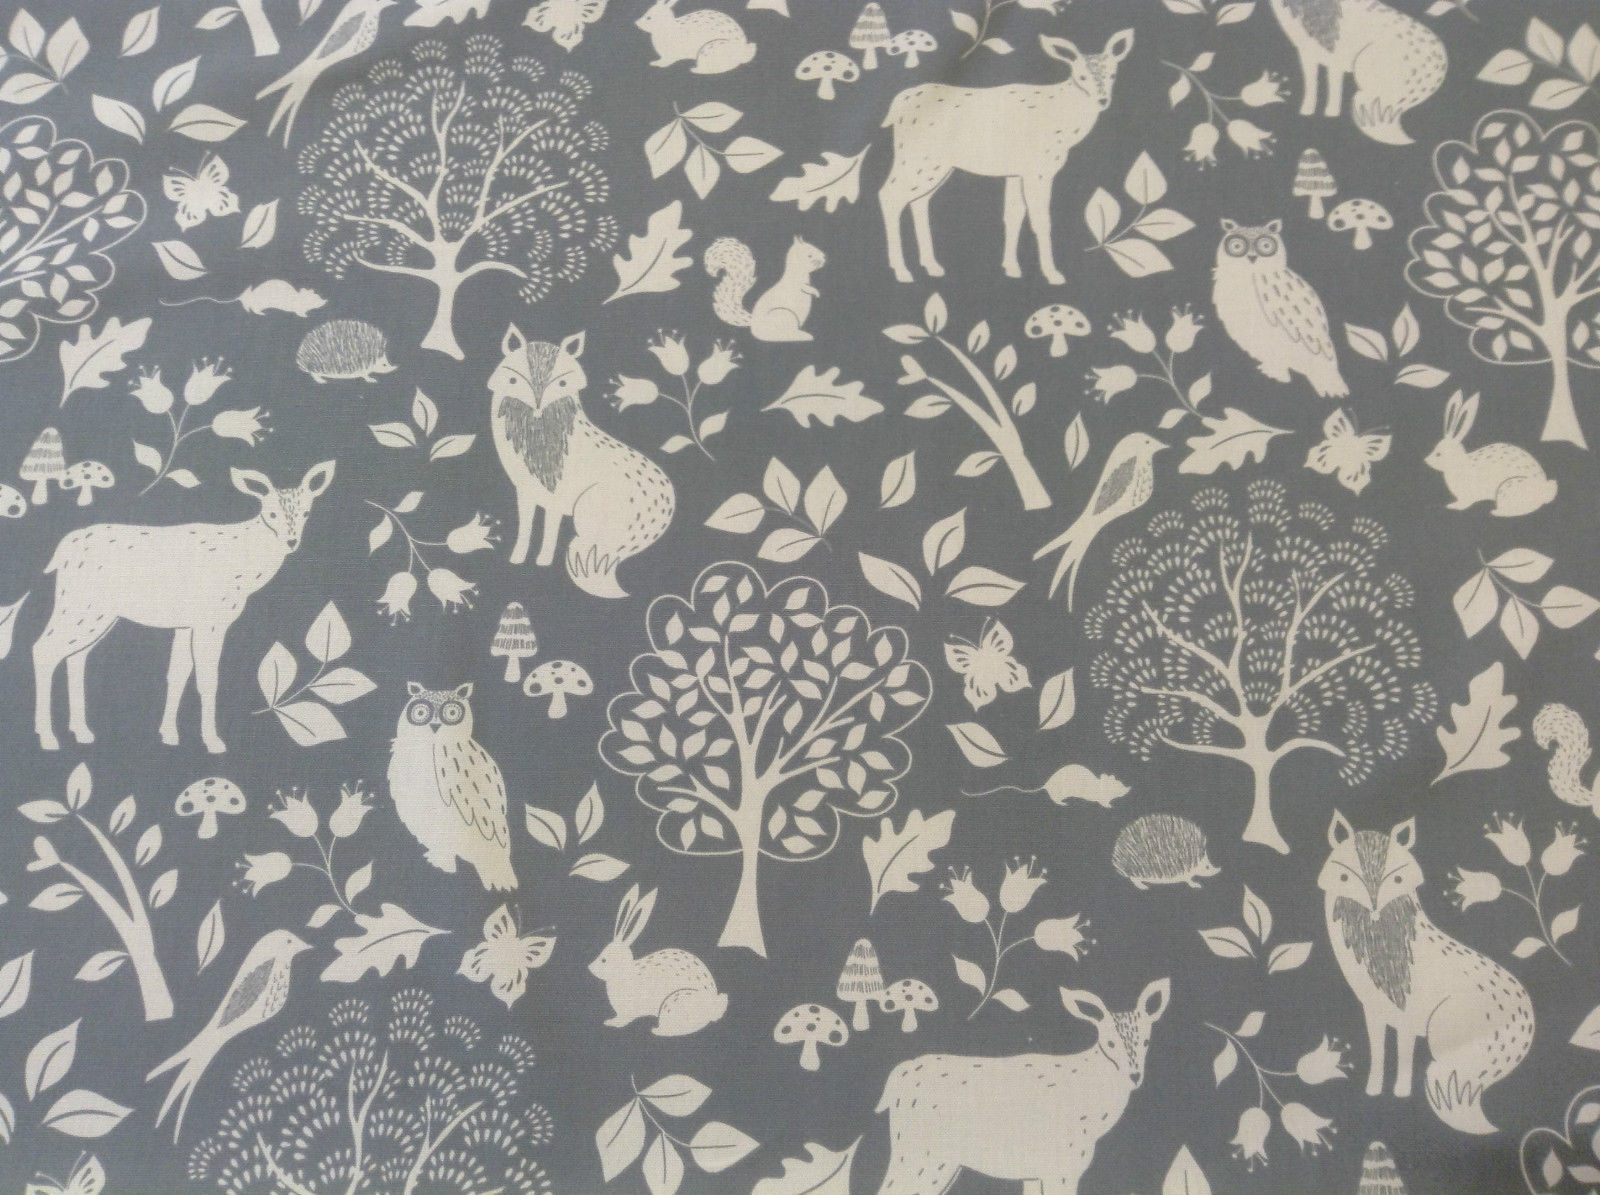 Winterwood Holiday Print Fabric Panel Woodland Animals